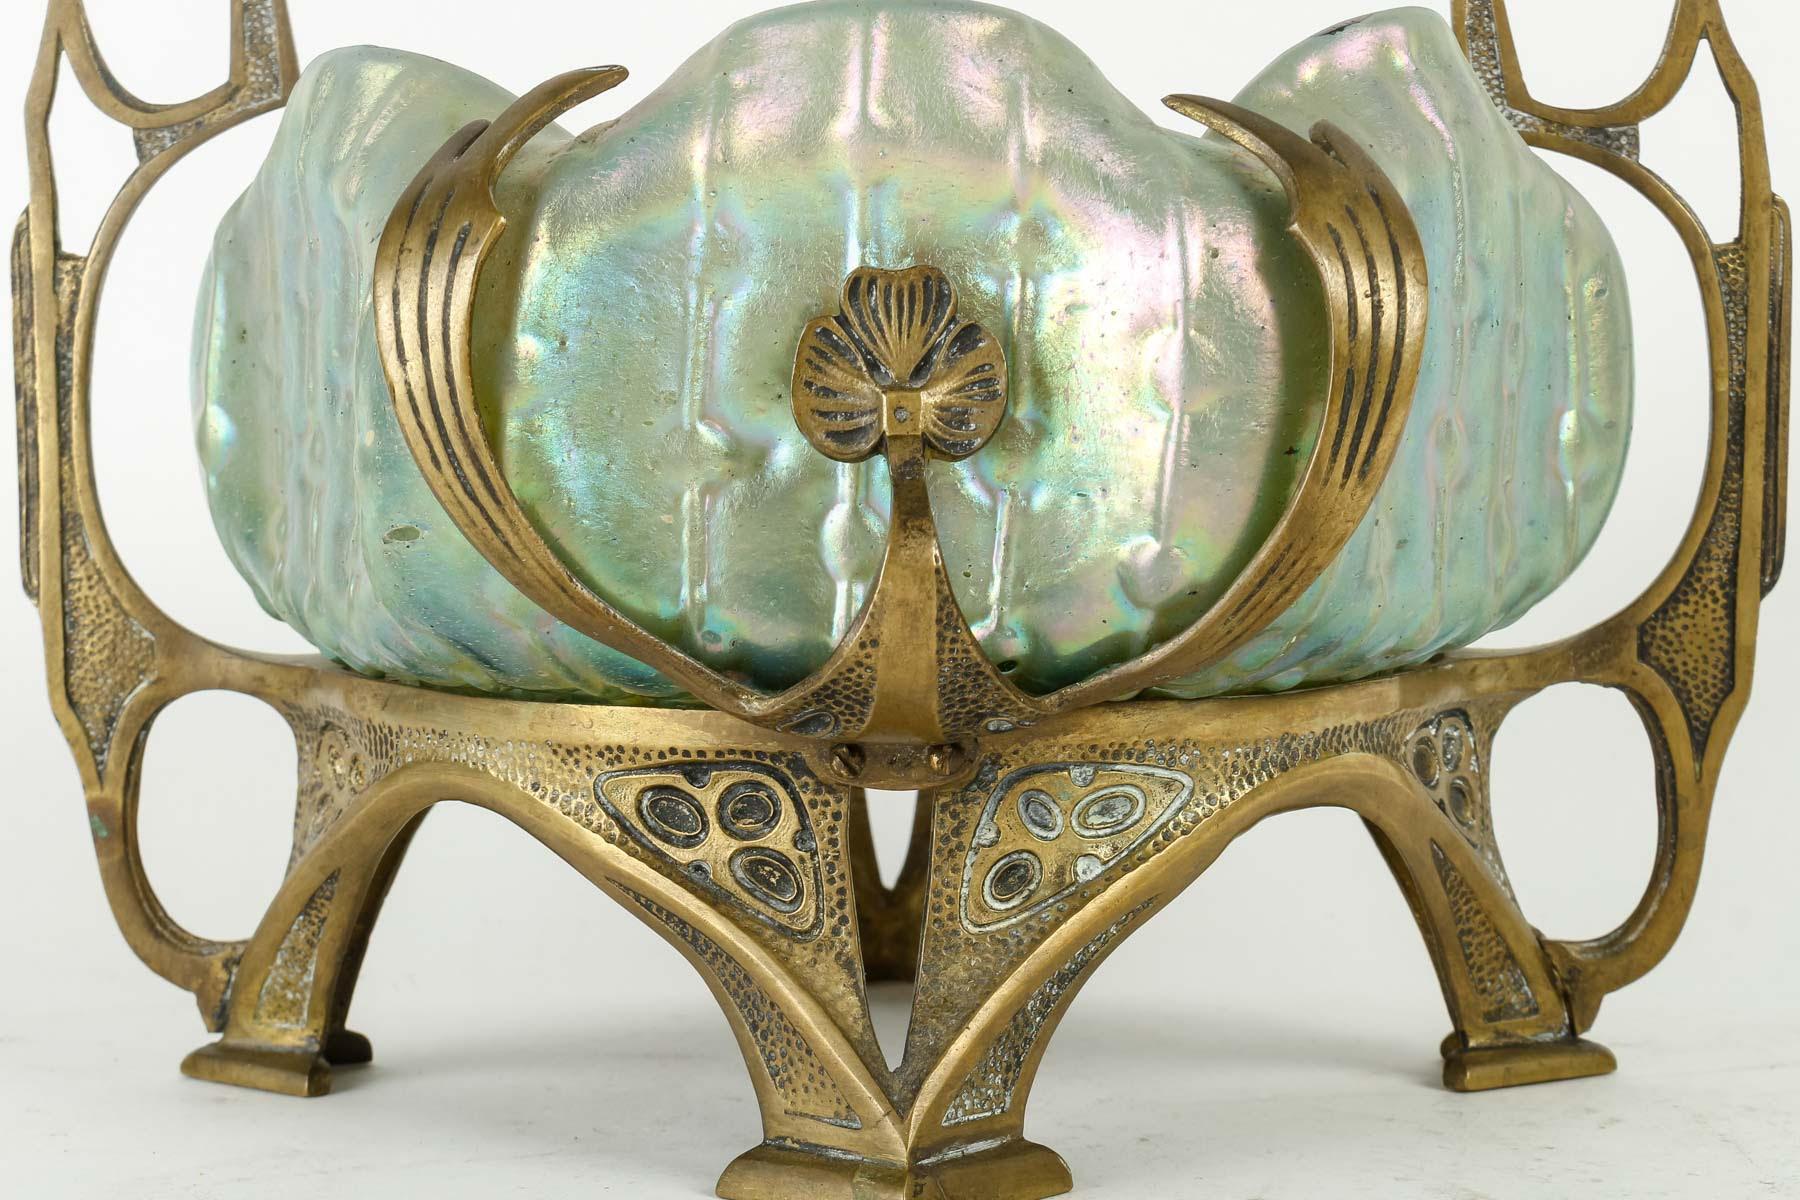 Leutz Art Nouveau goblet, Circa 1930.

Bronze and iridescent glass Leutz bowl, Art Deco period, 1930.
h: 21.5cm, w: 25cm, d: 22cm